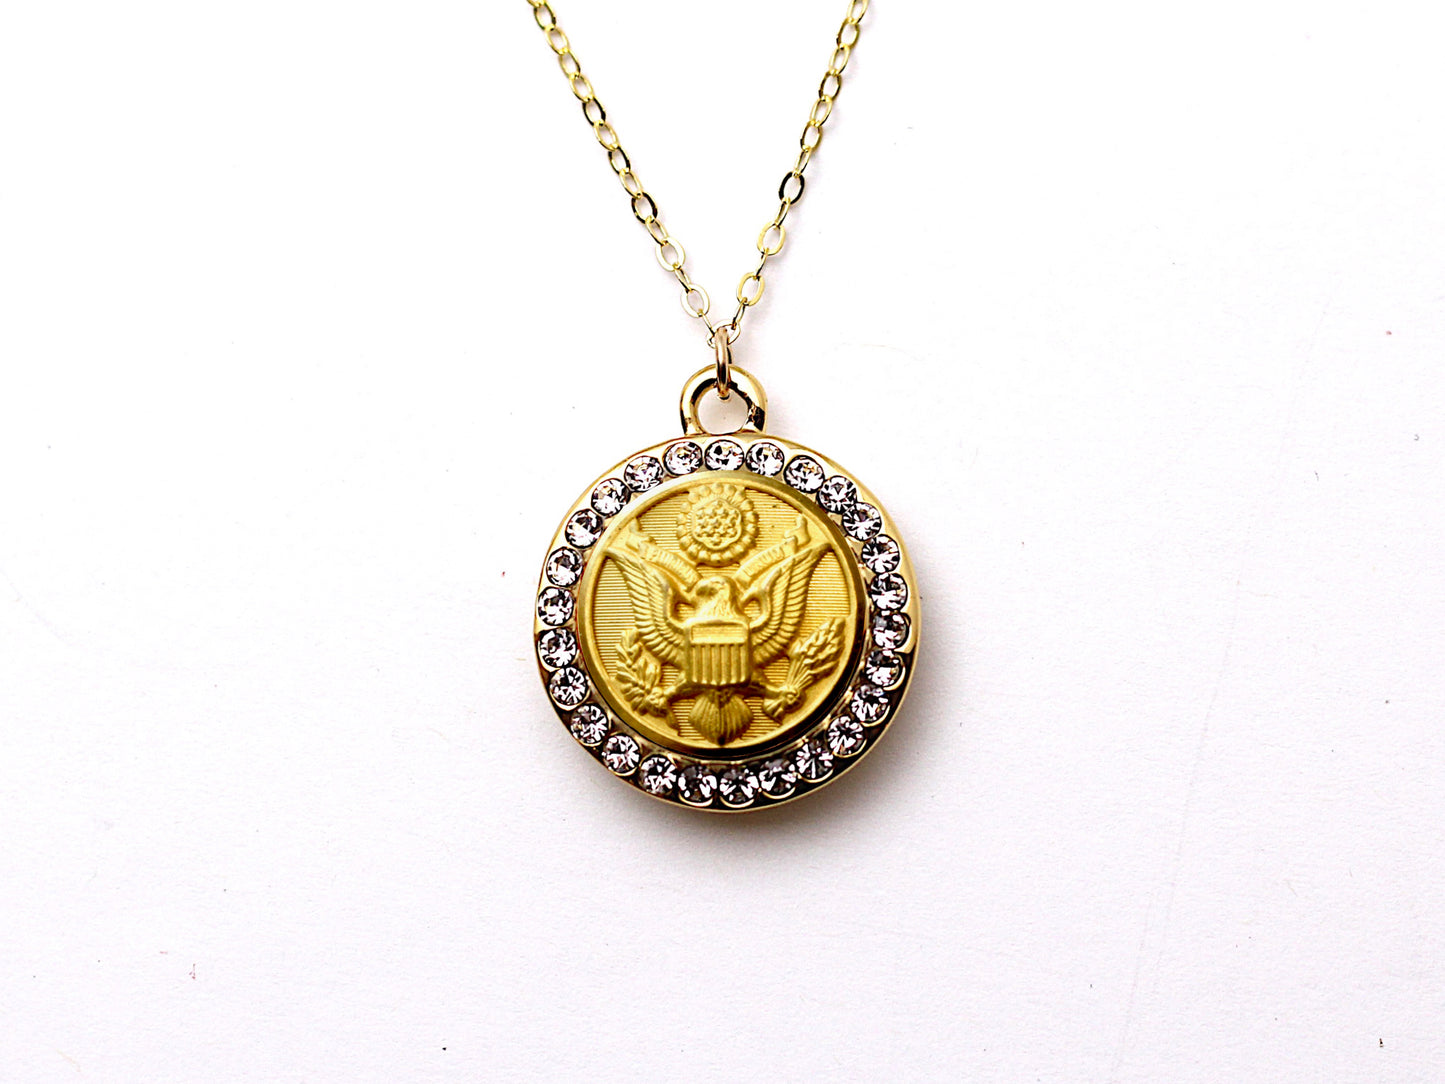 Army Button Necklace - Small Rhinestone Gold Pendant